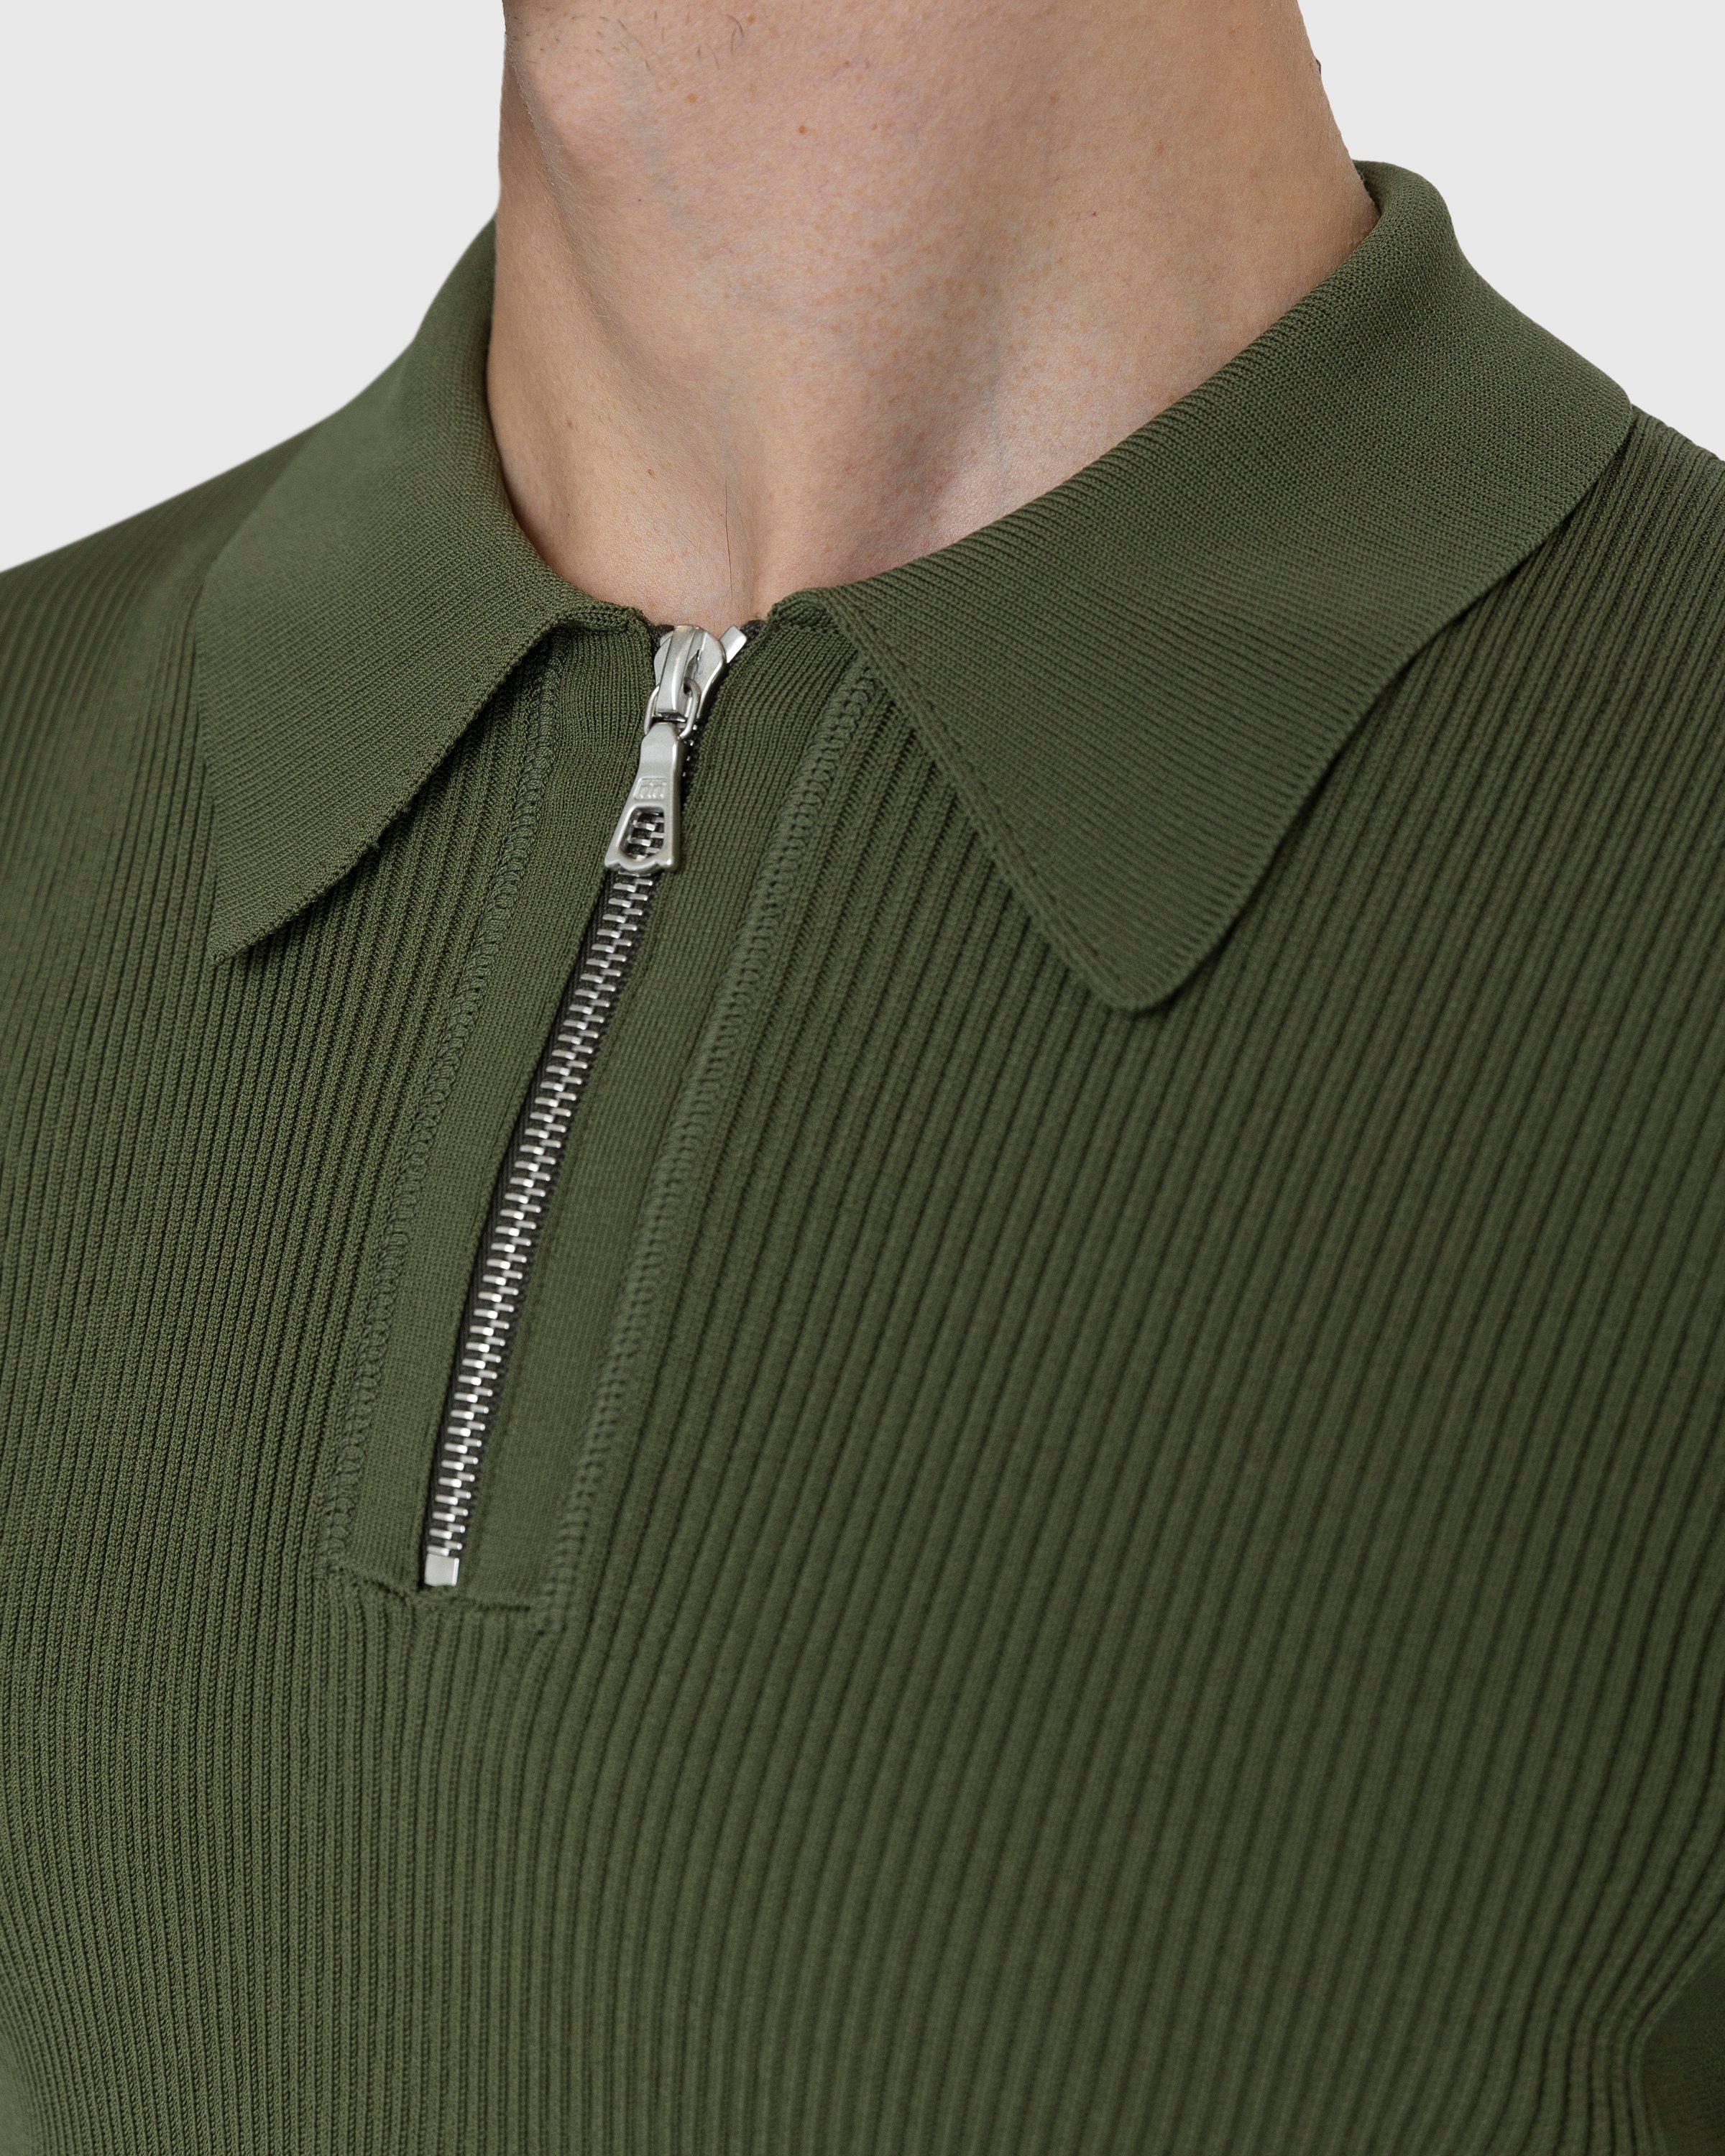 Dries van Noten - Neil Sweater - Clothing - Green - Image 5